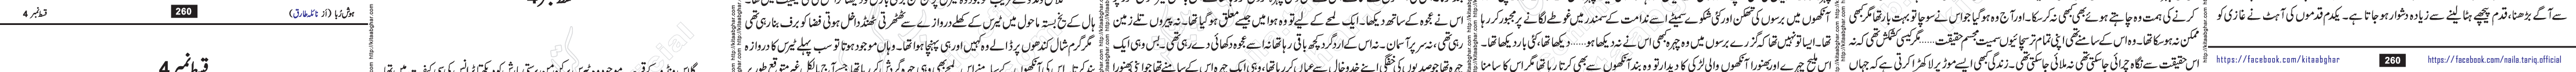 Hosh Ruba last episode 5 Urdu Novel by Naila Tariq